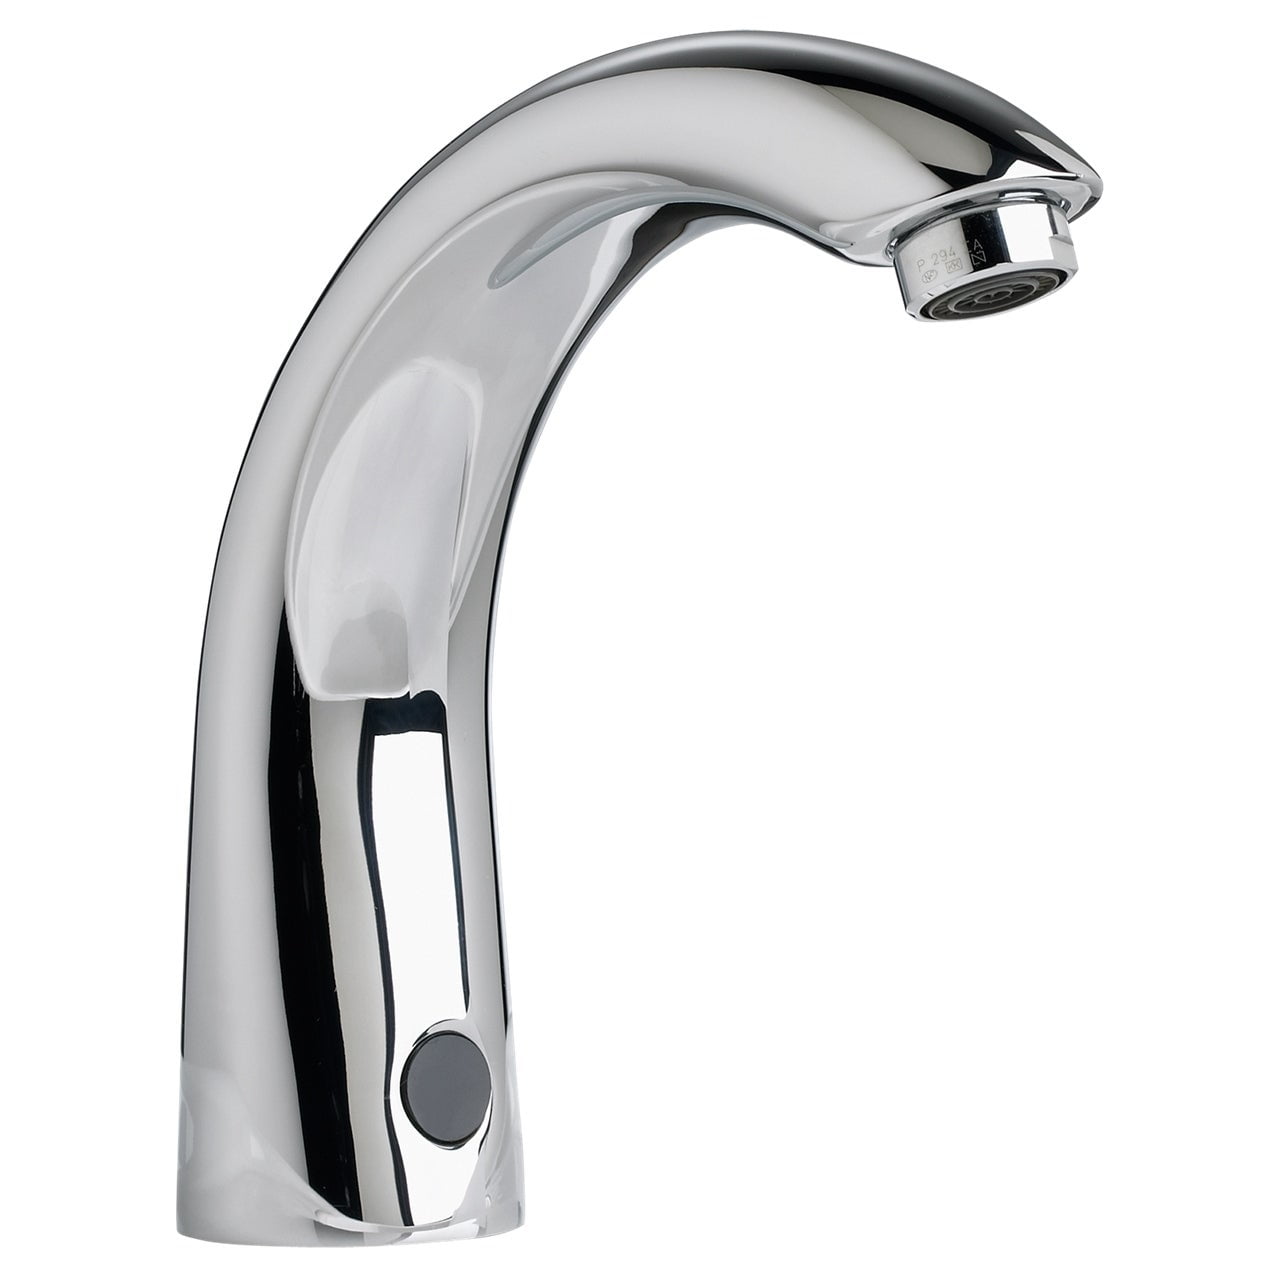 American Standard Selectronic 05 Gpm Base Model Bathroom Faucet With Proximity Sensor In Polished Chrome Walmartcom Walmartcom